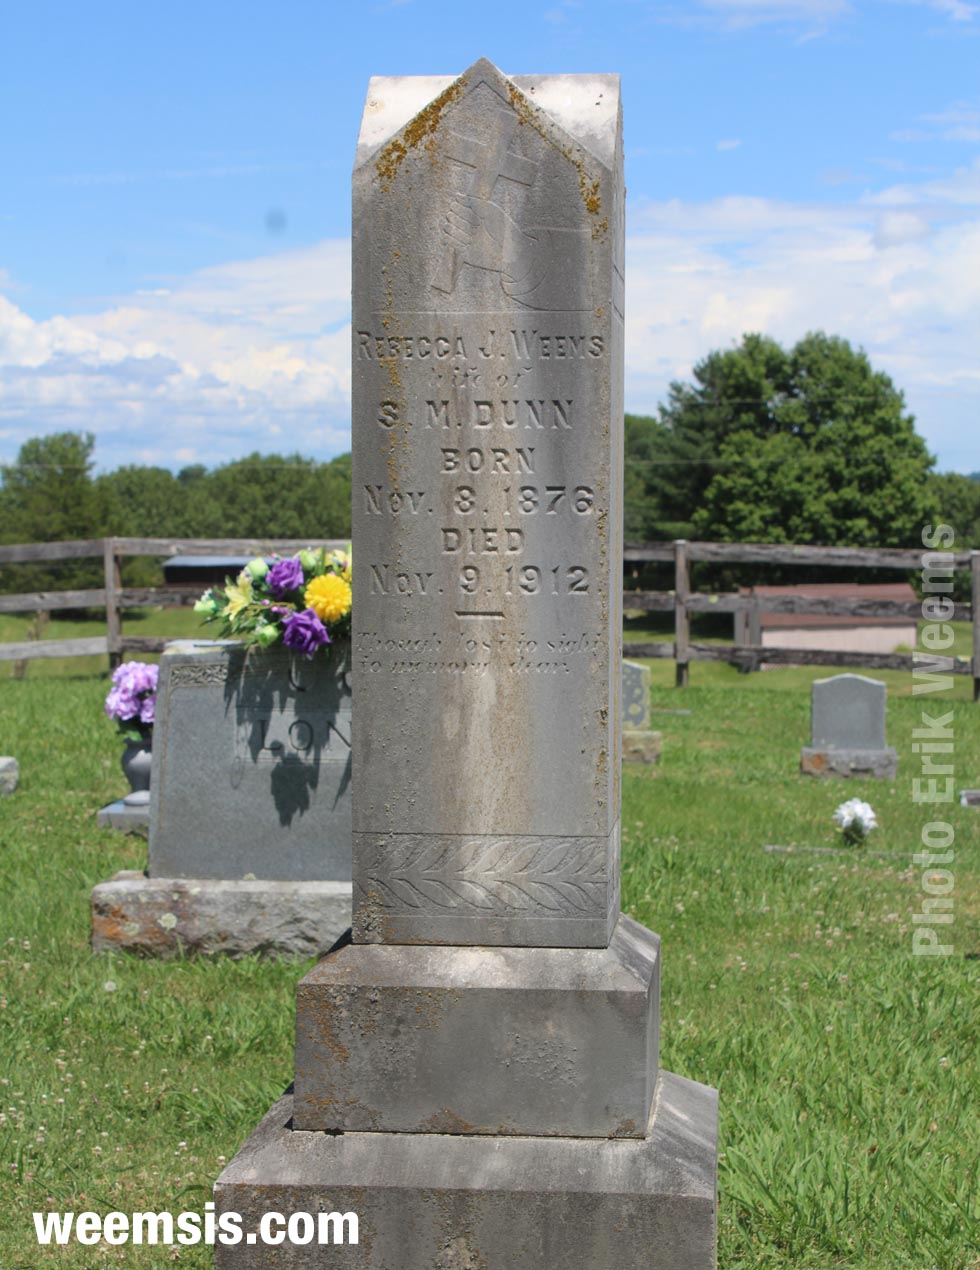 Rebecca J Weems gravestone marker